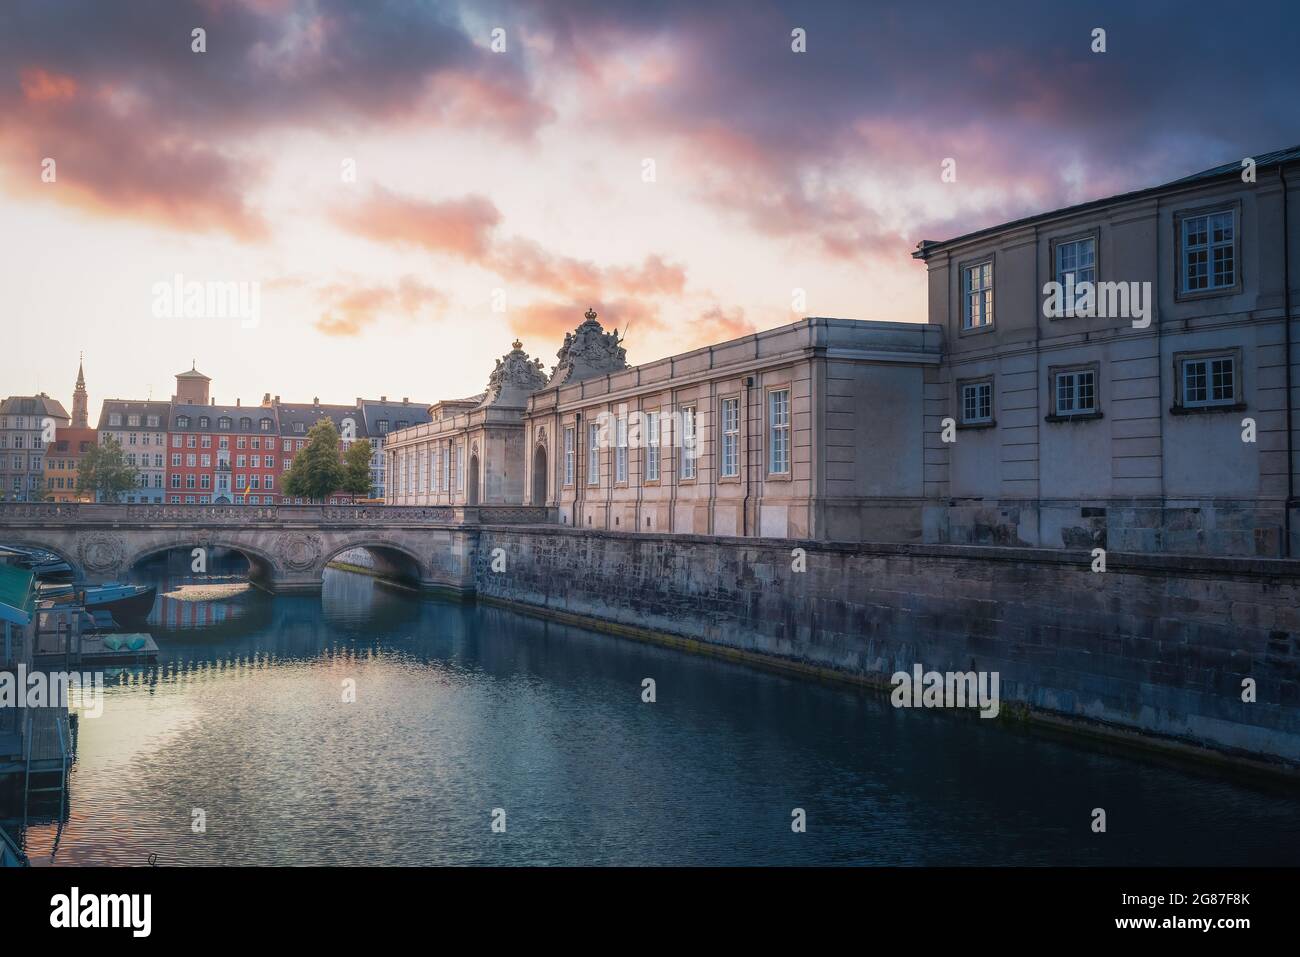 Frederikholms Canal, Marble Bridge and Christiansborg Palace Entrance at sunset - Copenhagen, Denmark Stock Photo